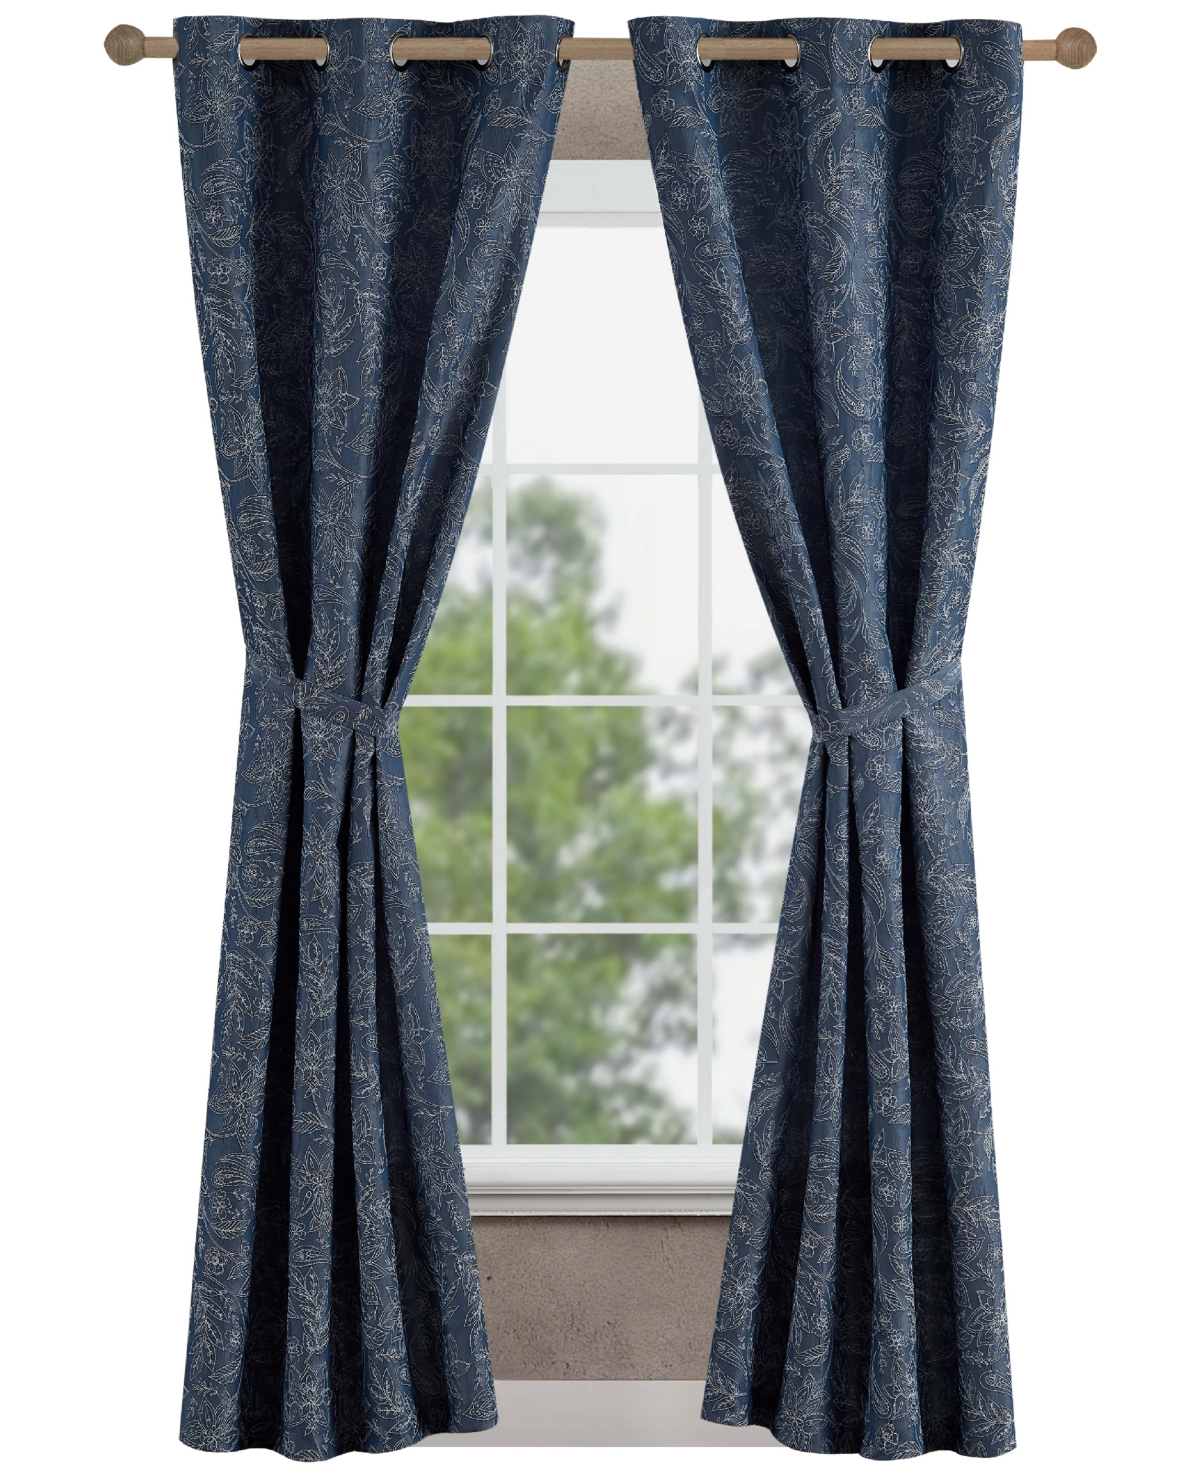 Jessica Simpson Groovy Paisley Textured Blackout Grommet Window Curtain Panel Pair With Tiebacks, 38" X 84" In Navy